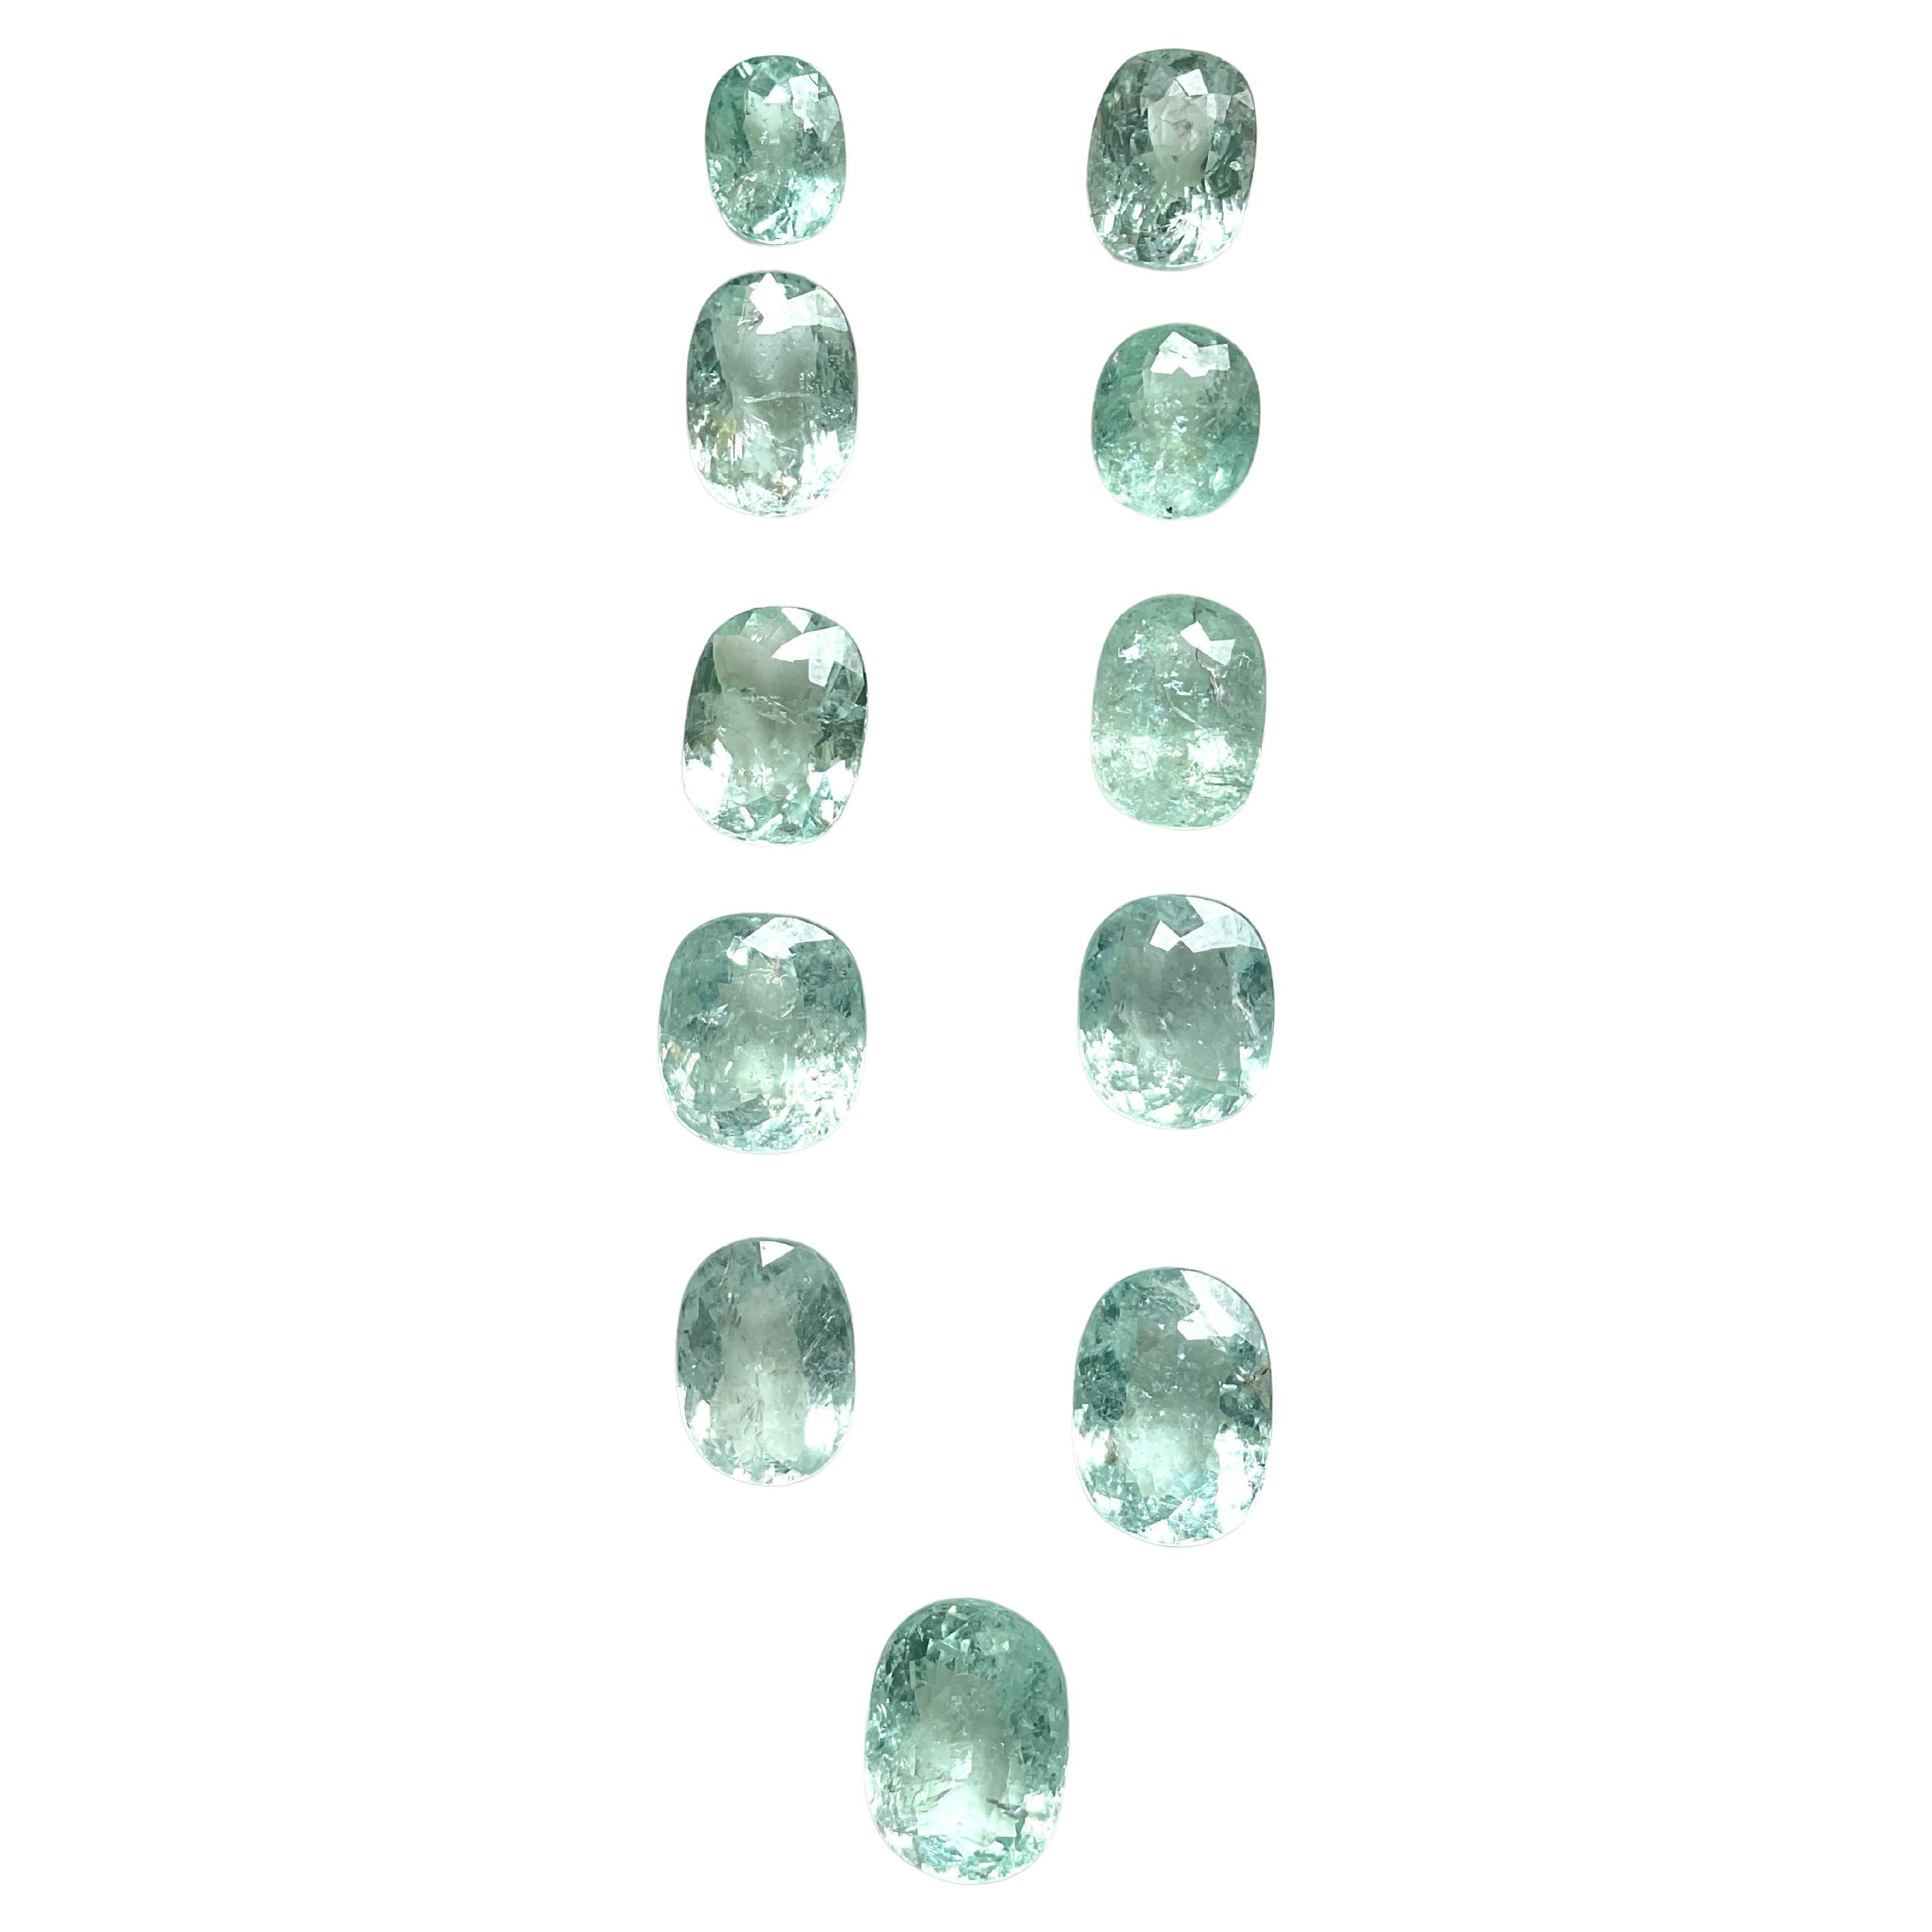 Certified 36.04 Carats Paraiba Tourmaline Oval Cut Stone Layout for Fine Jewelry
Gemstone - Paraiba Tourmaline
Color - Greenish Blue
Origin - Mozambique
Size - 6x8 To 12x9 MM
Piece - 11